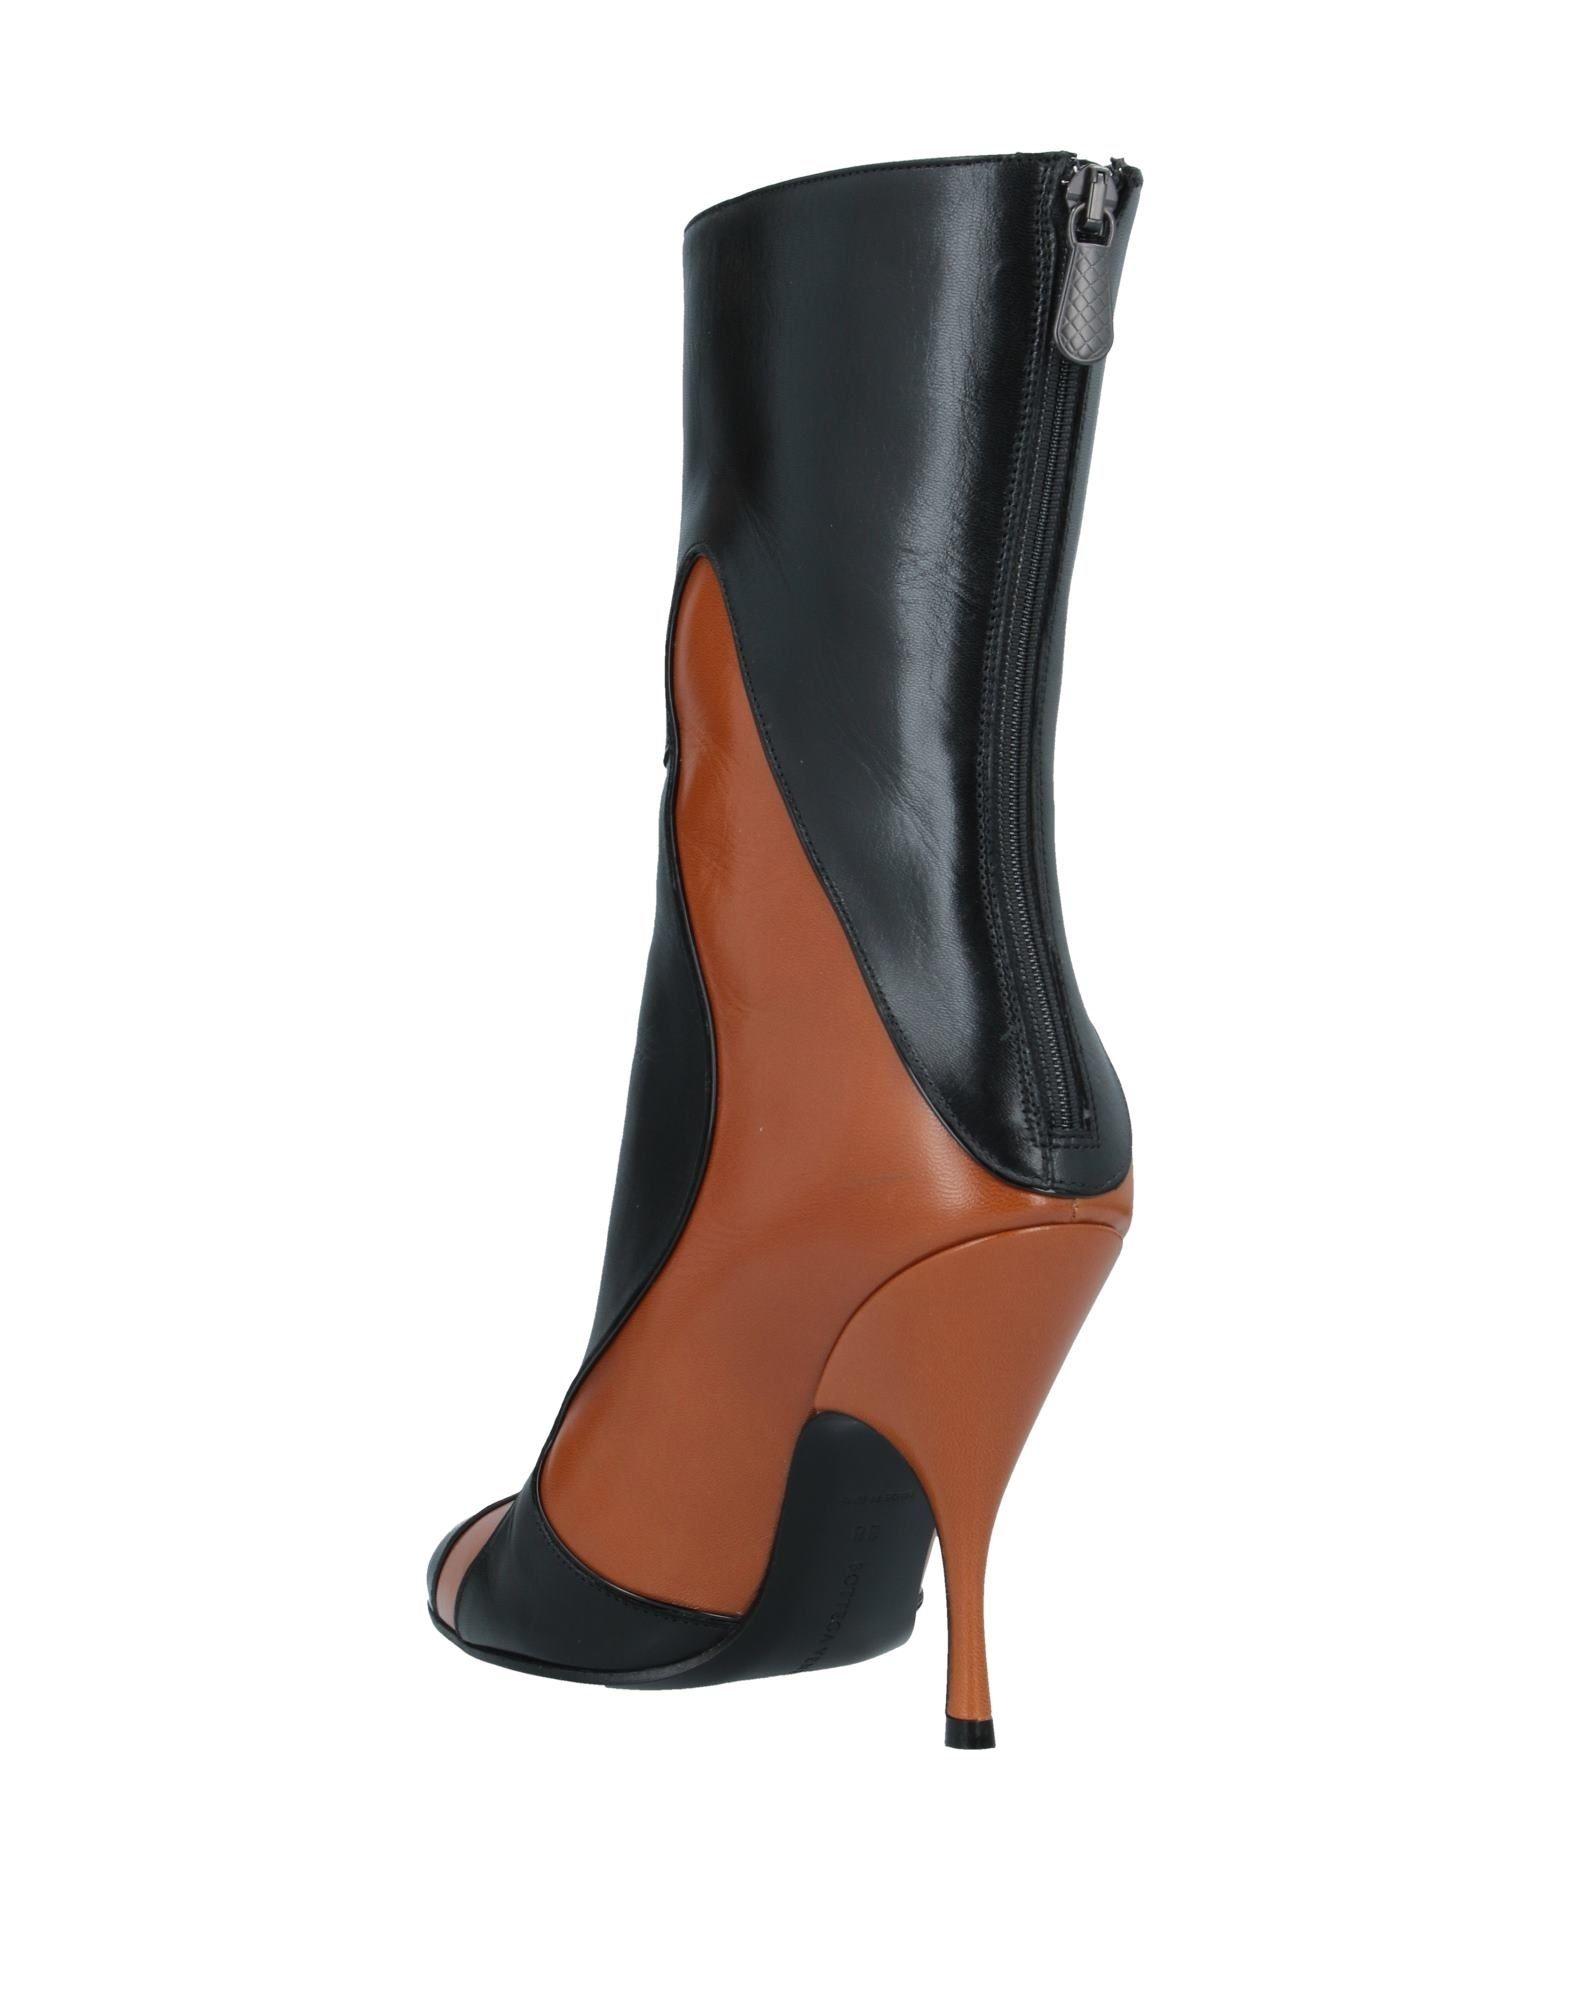 Bottega Veneta Leather Ankle Boots in Brown - Lyst